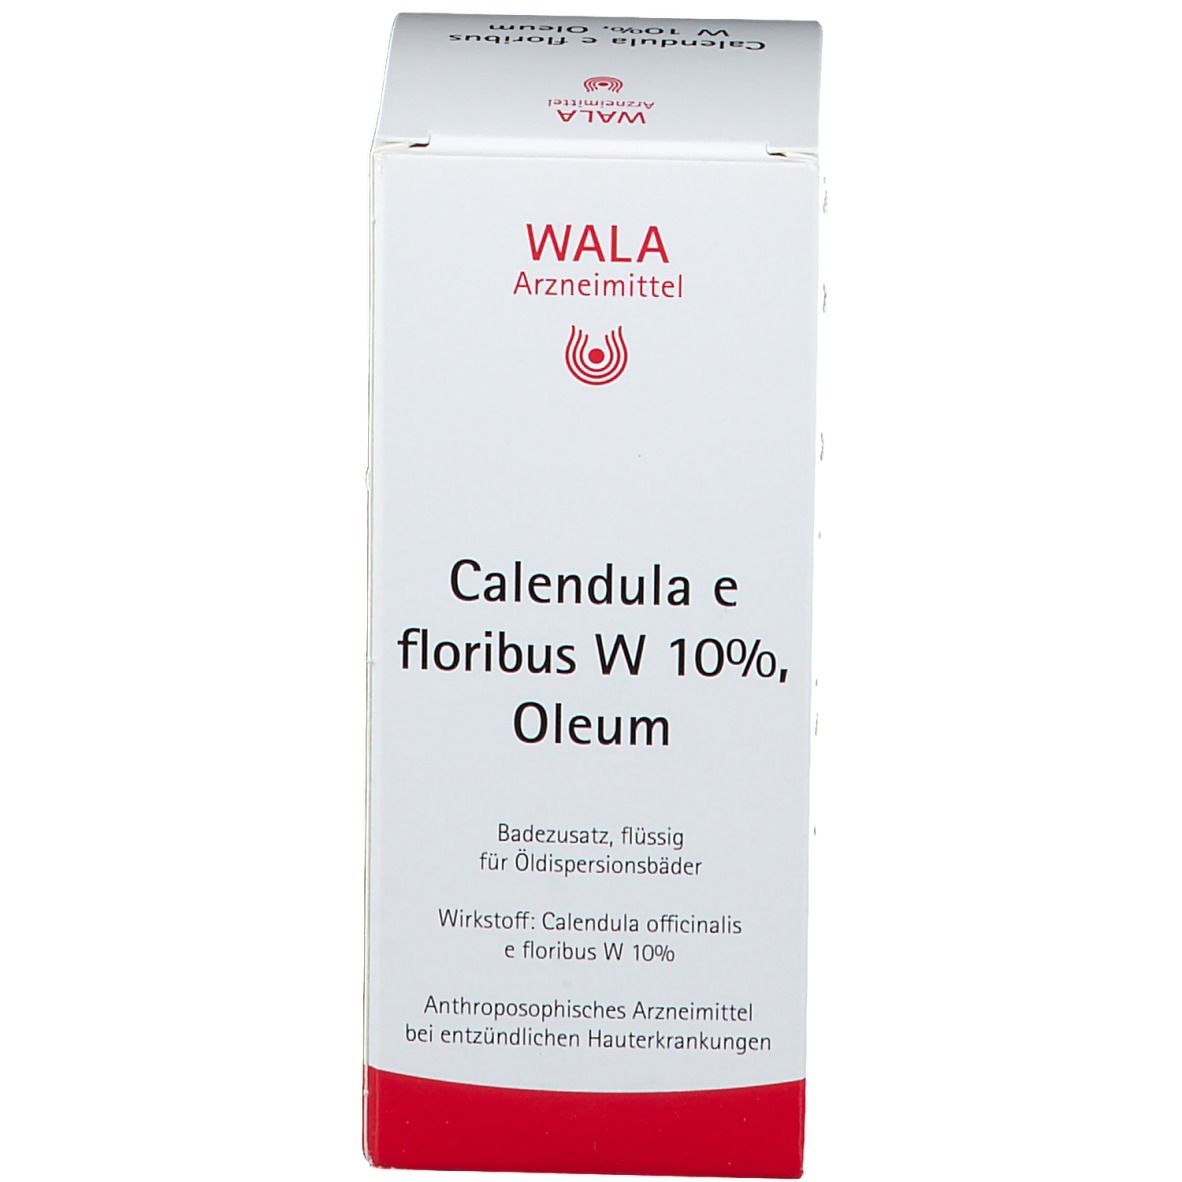 WALA® Calendula e Floribus W 10% Oleum